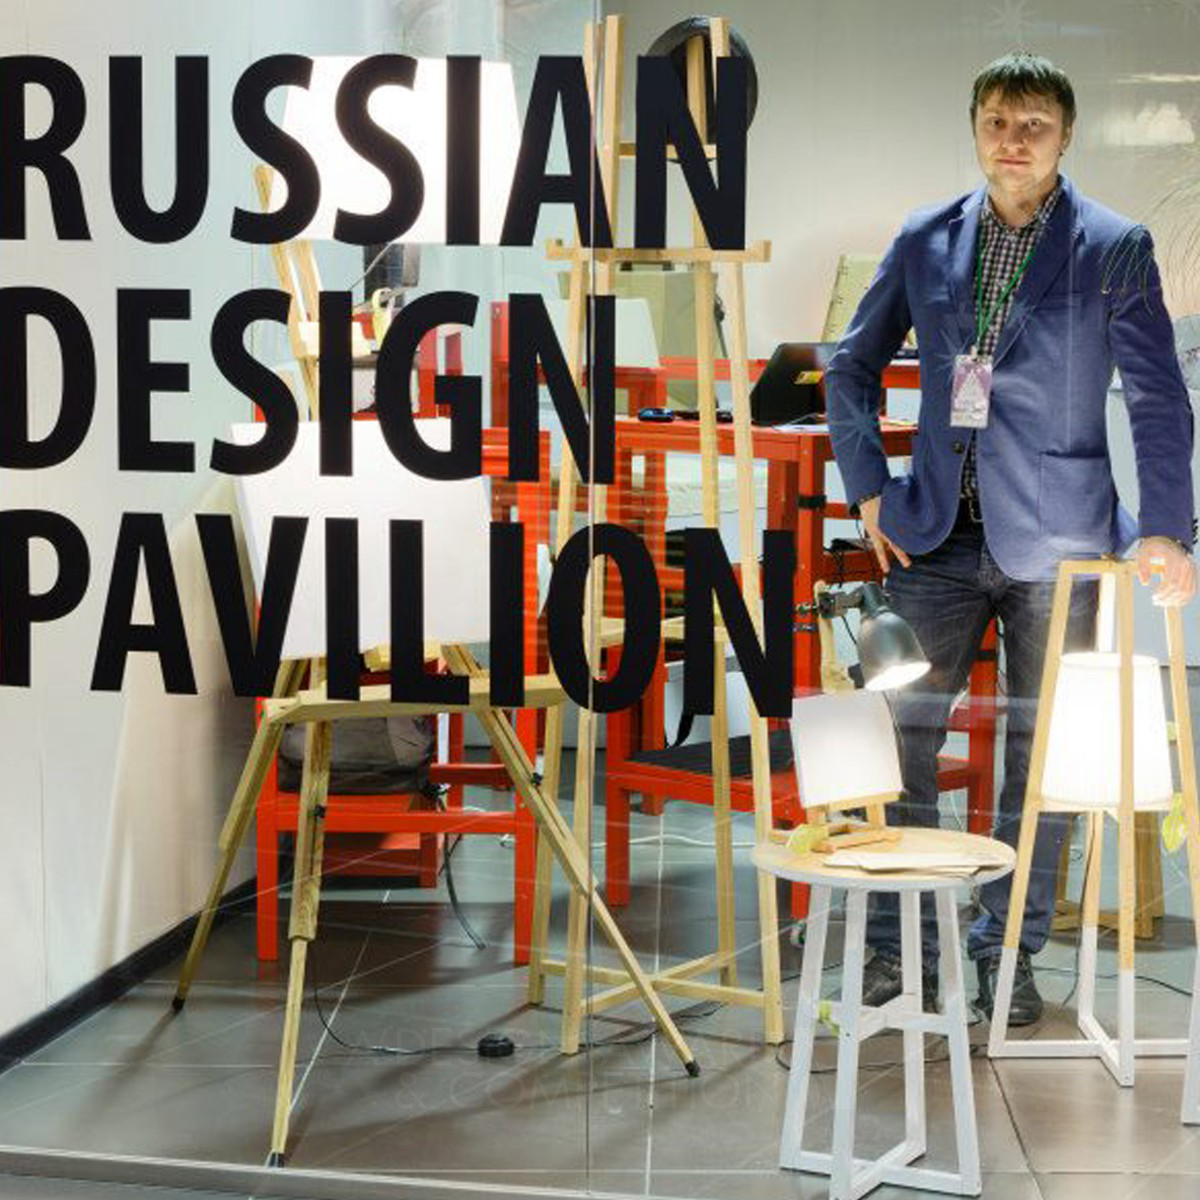 Russian Design Pavilion Program of design events by Russian Design Pavilion